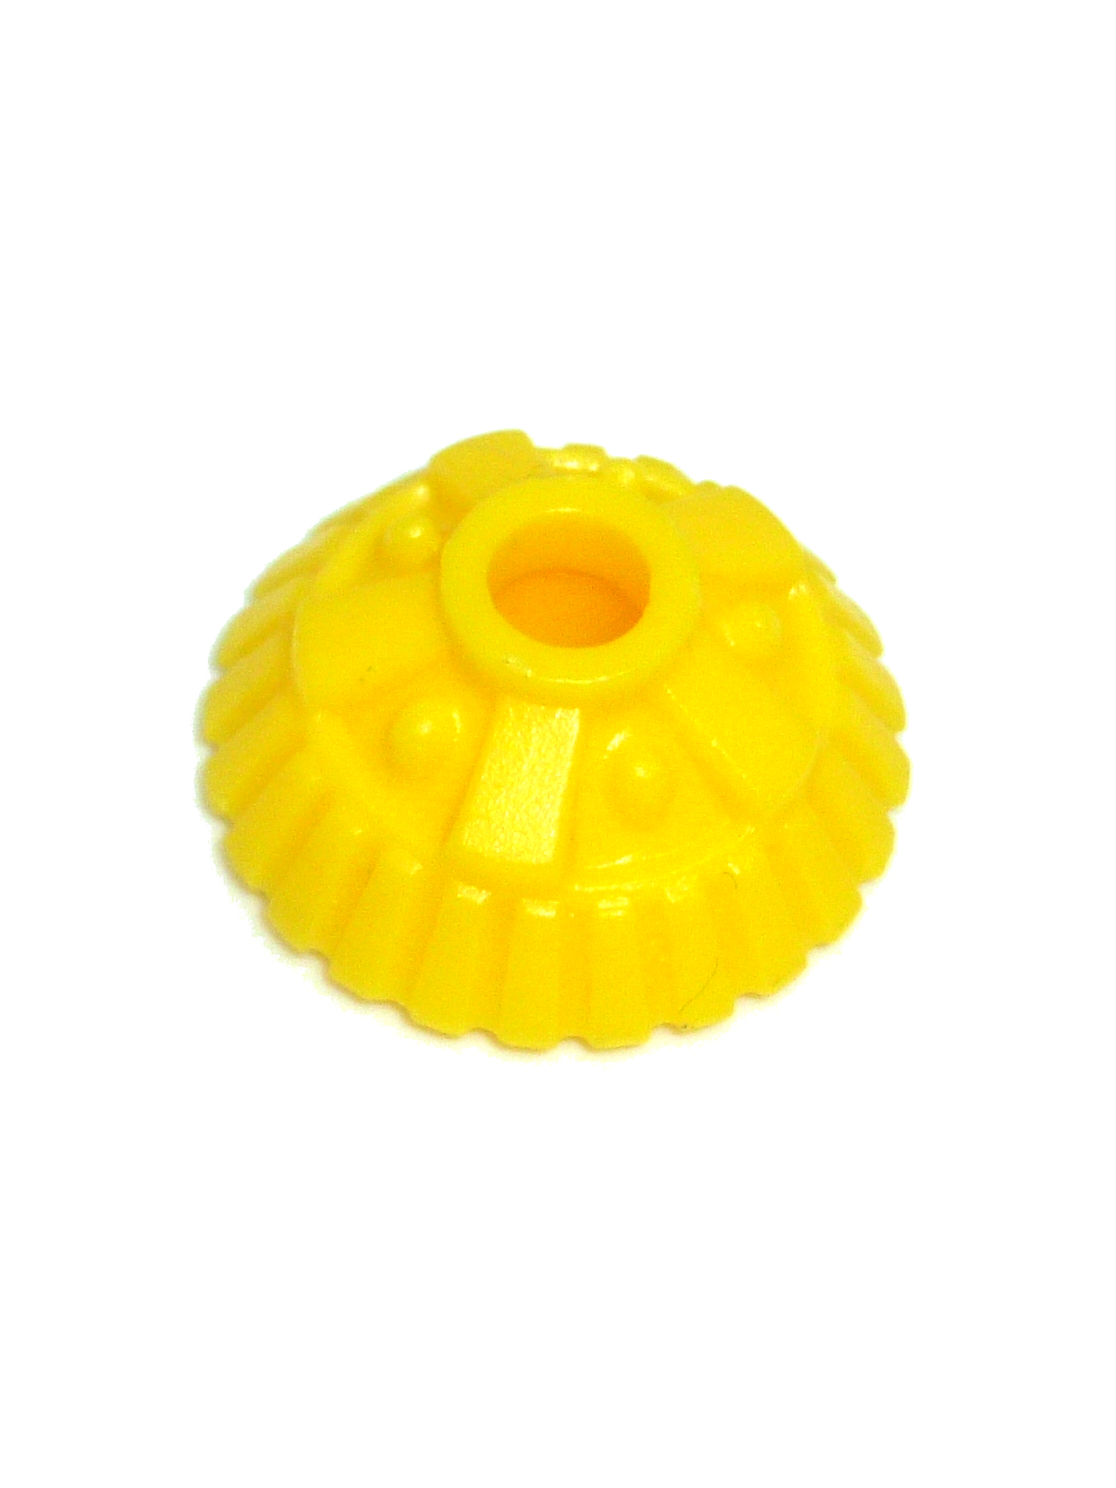 Light yellow wheel / round spare part